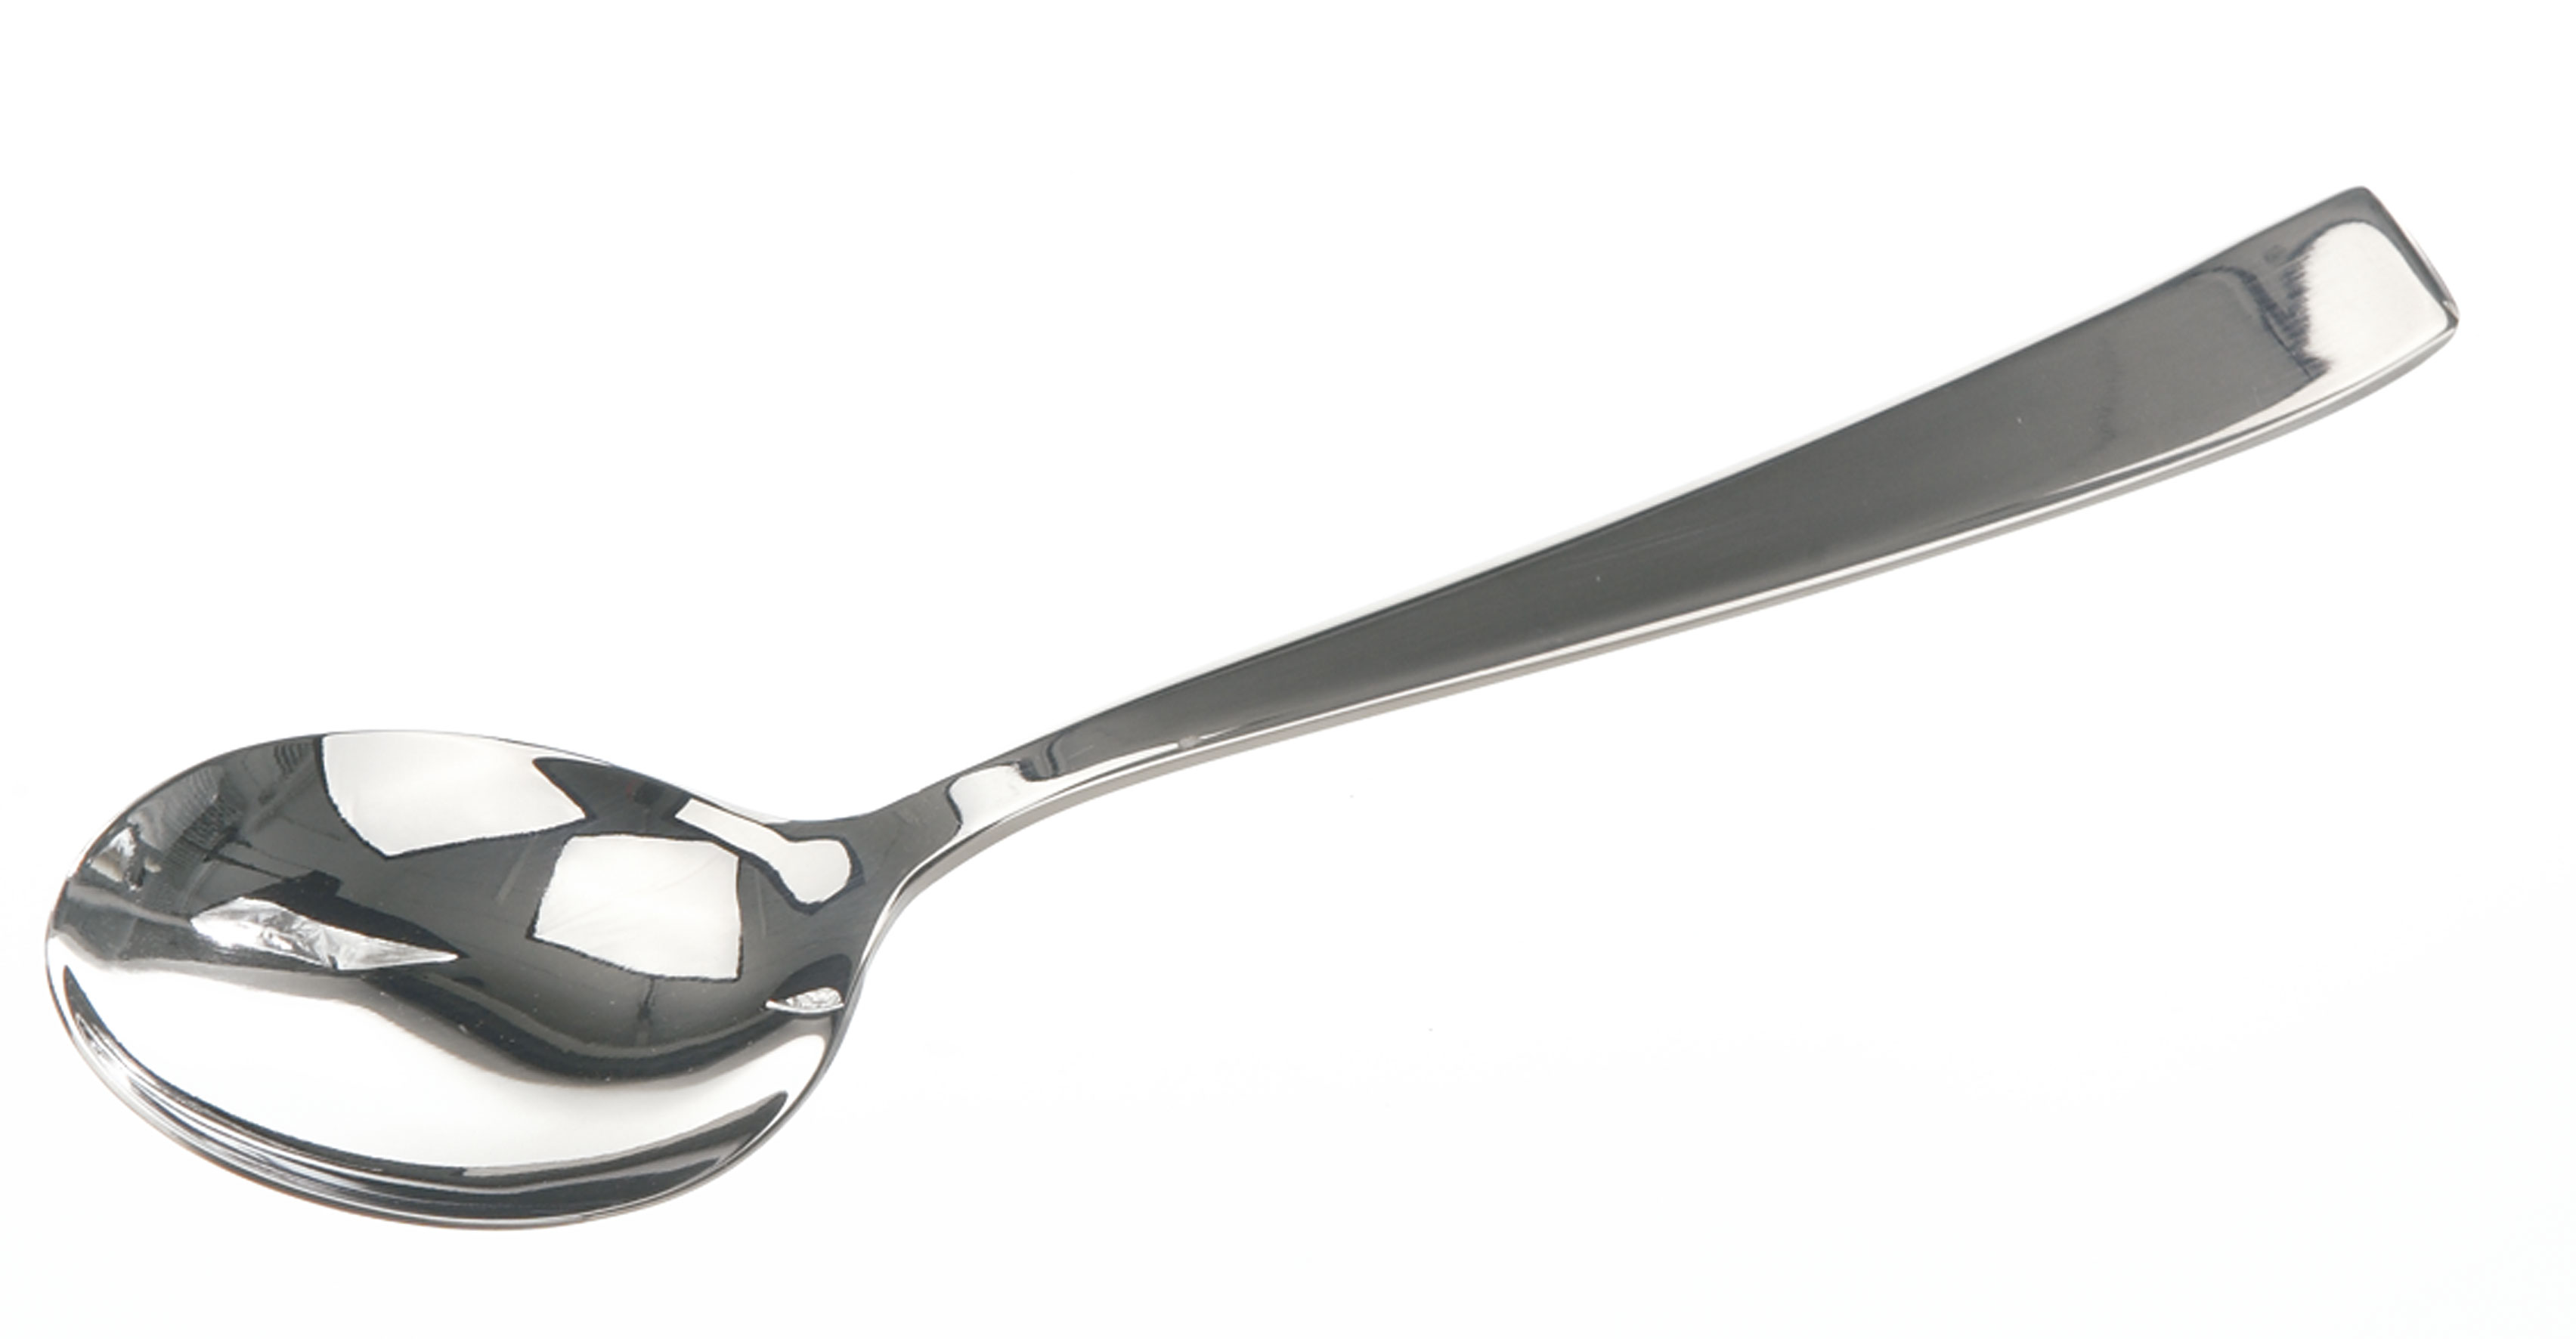 Laboratory spoon. Length (mm): 120. Spatula (mm): 26x40